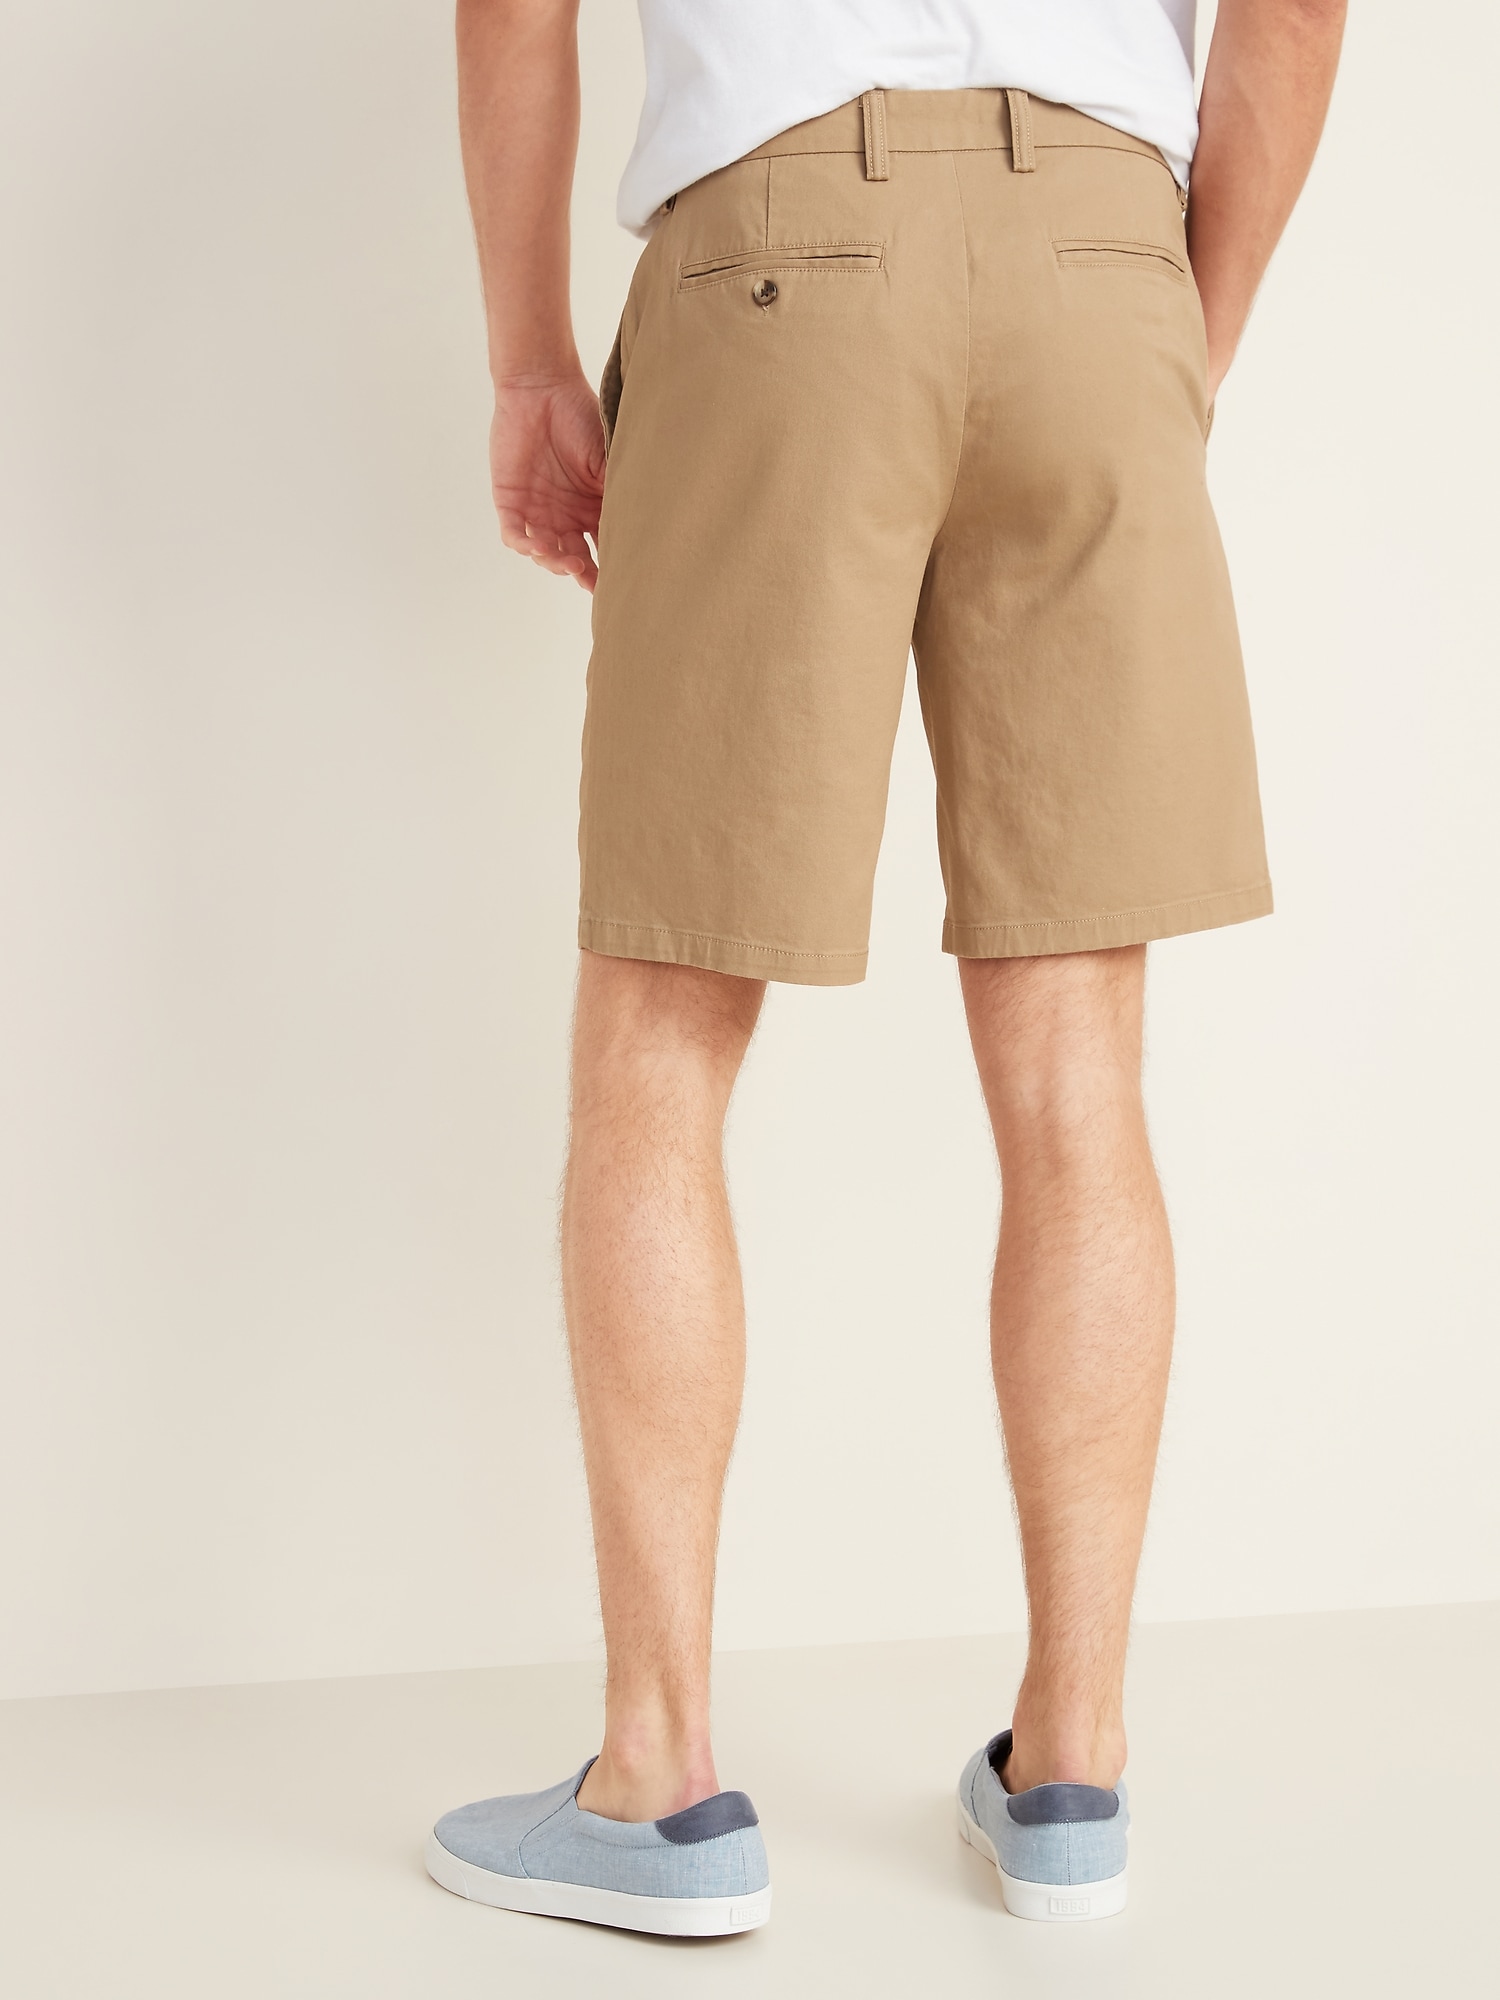 Slim Ultimate Shorts For Men 10 Inch Inseam Old Navy